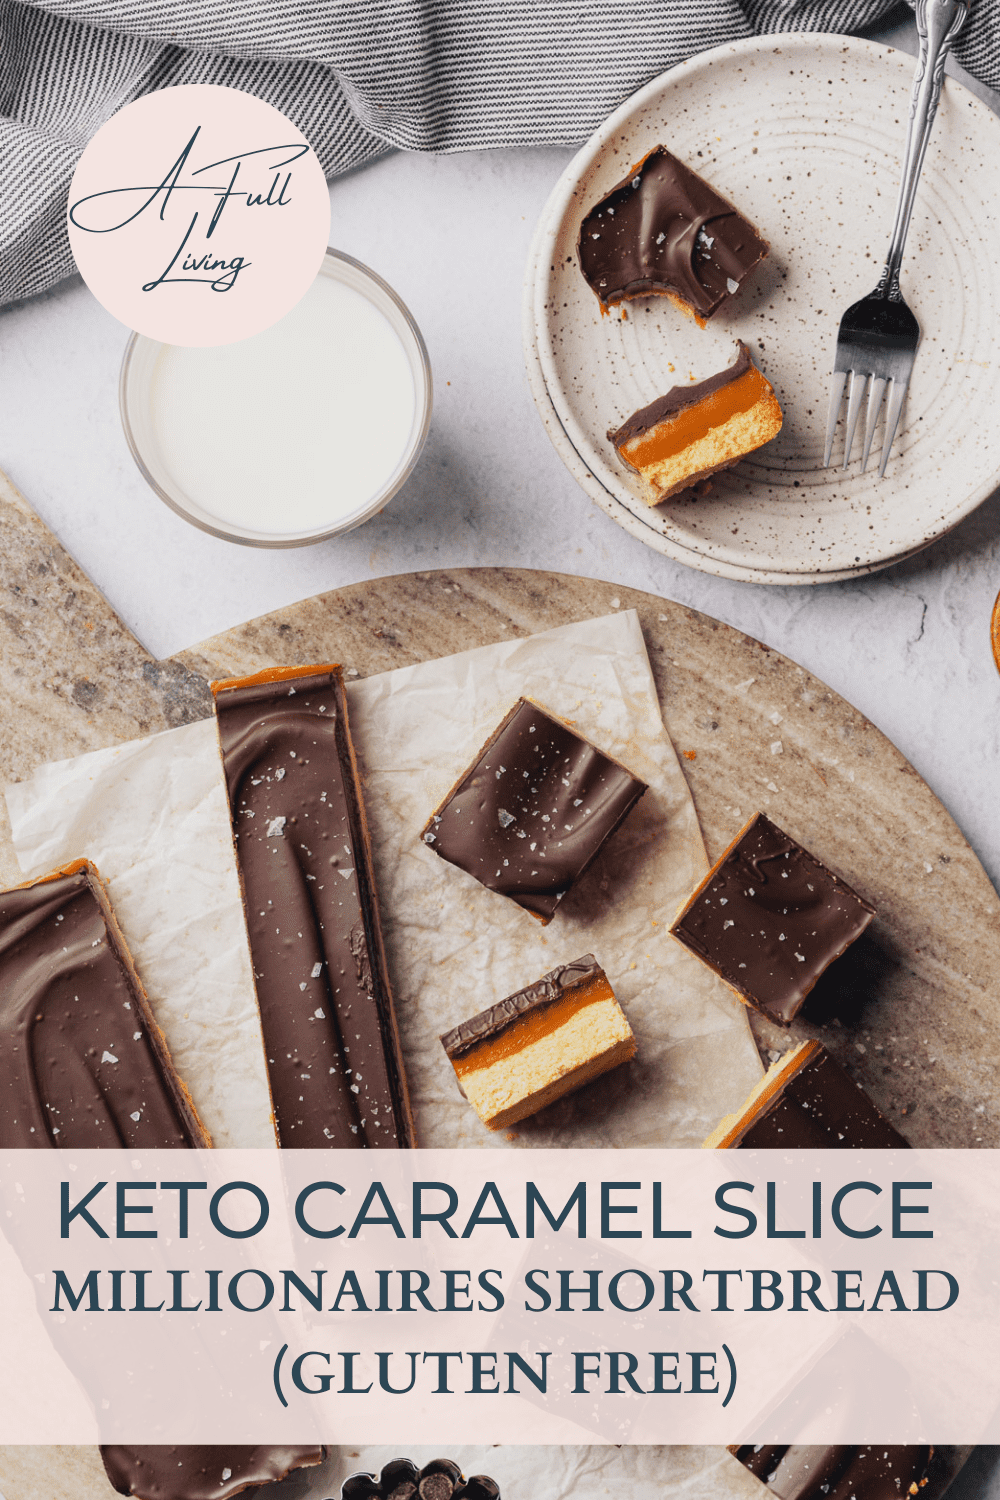 keto caramel slice recipe - gluten free millionaires shortbread